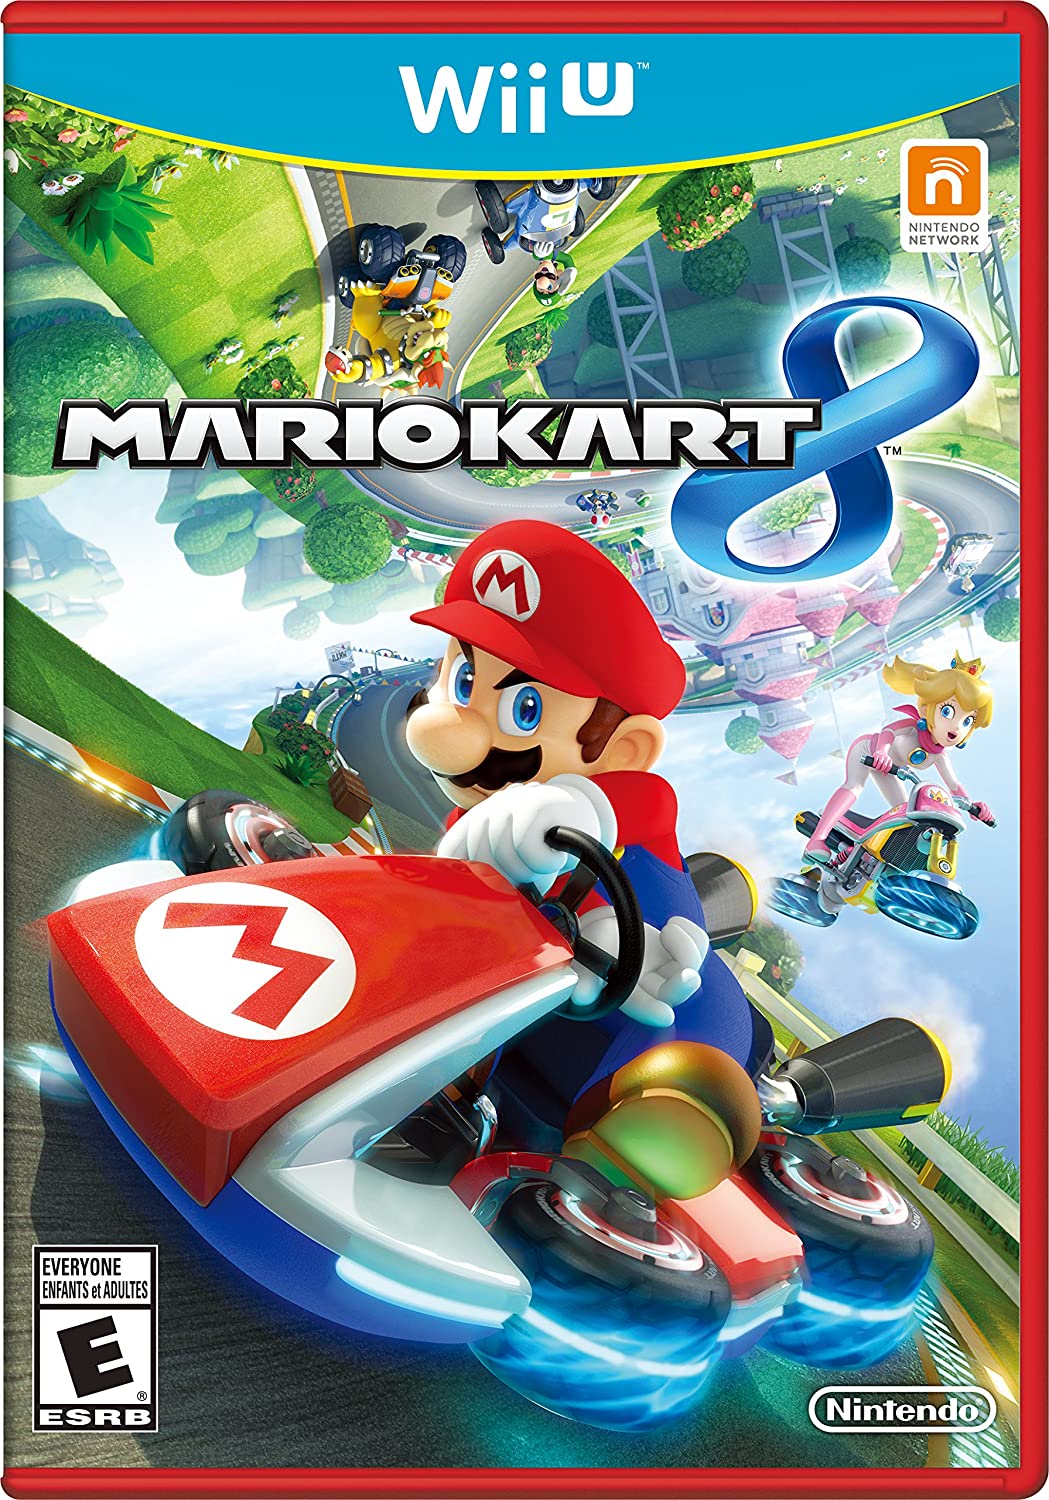 Mario Kart 8 - [Game Disc & Case] Wii U